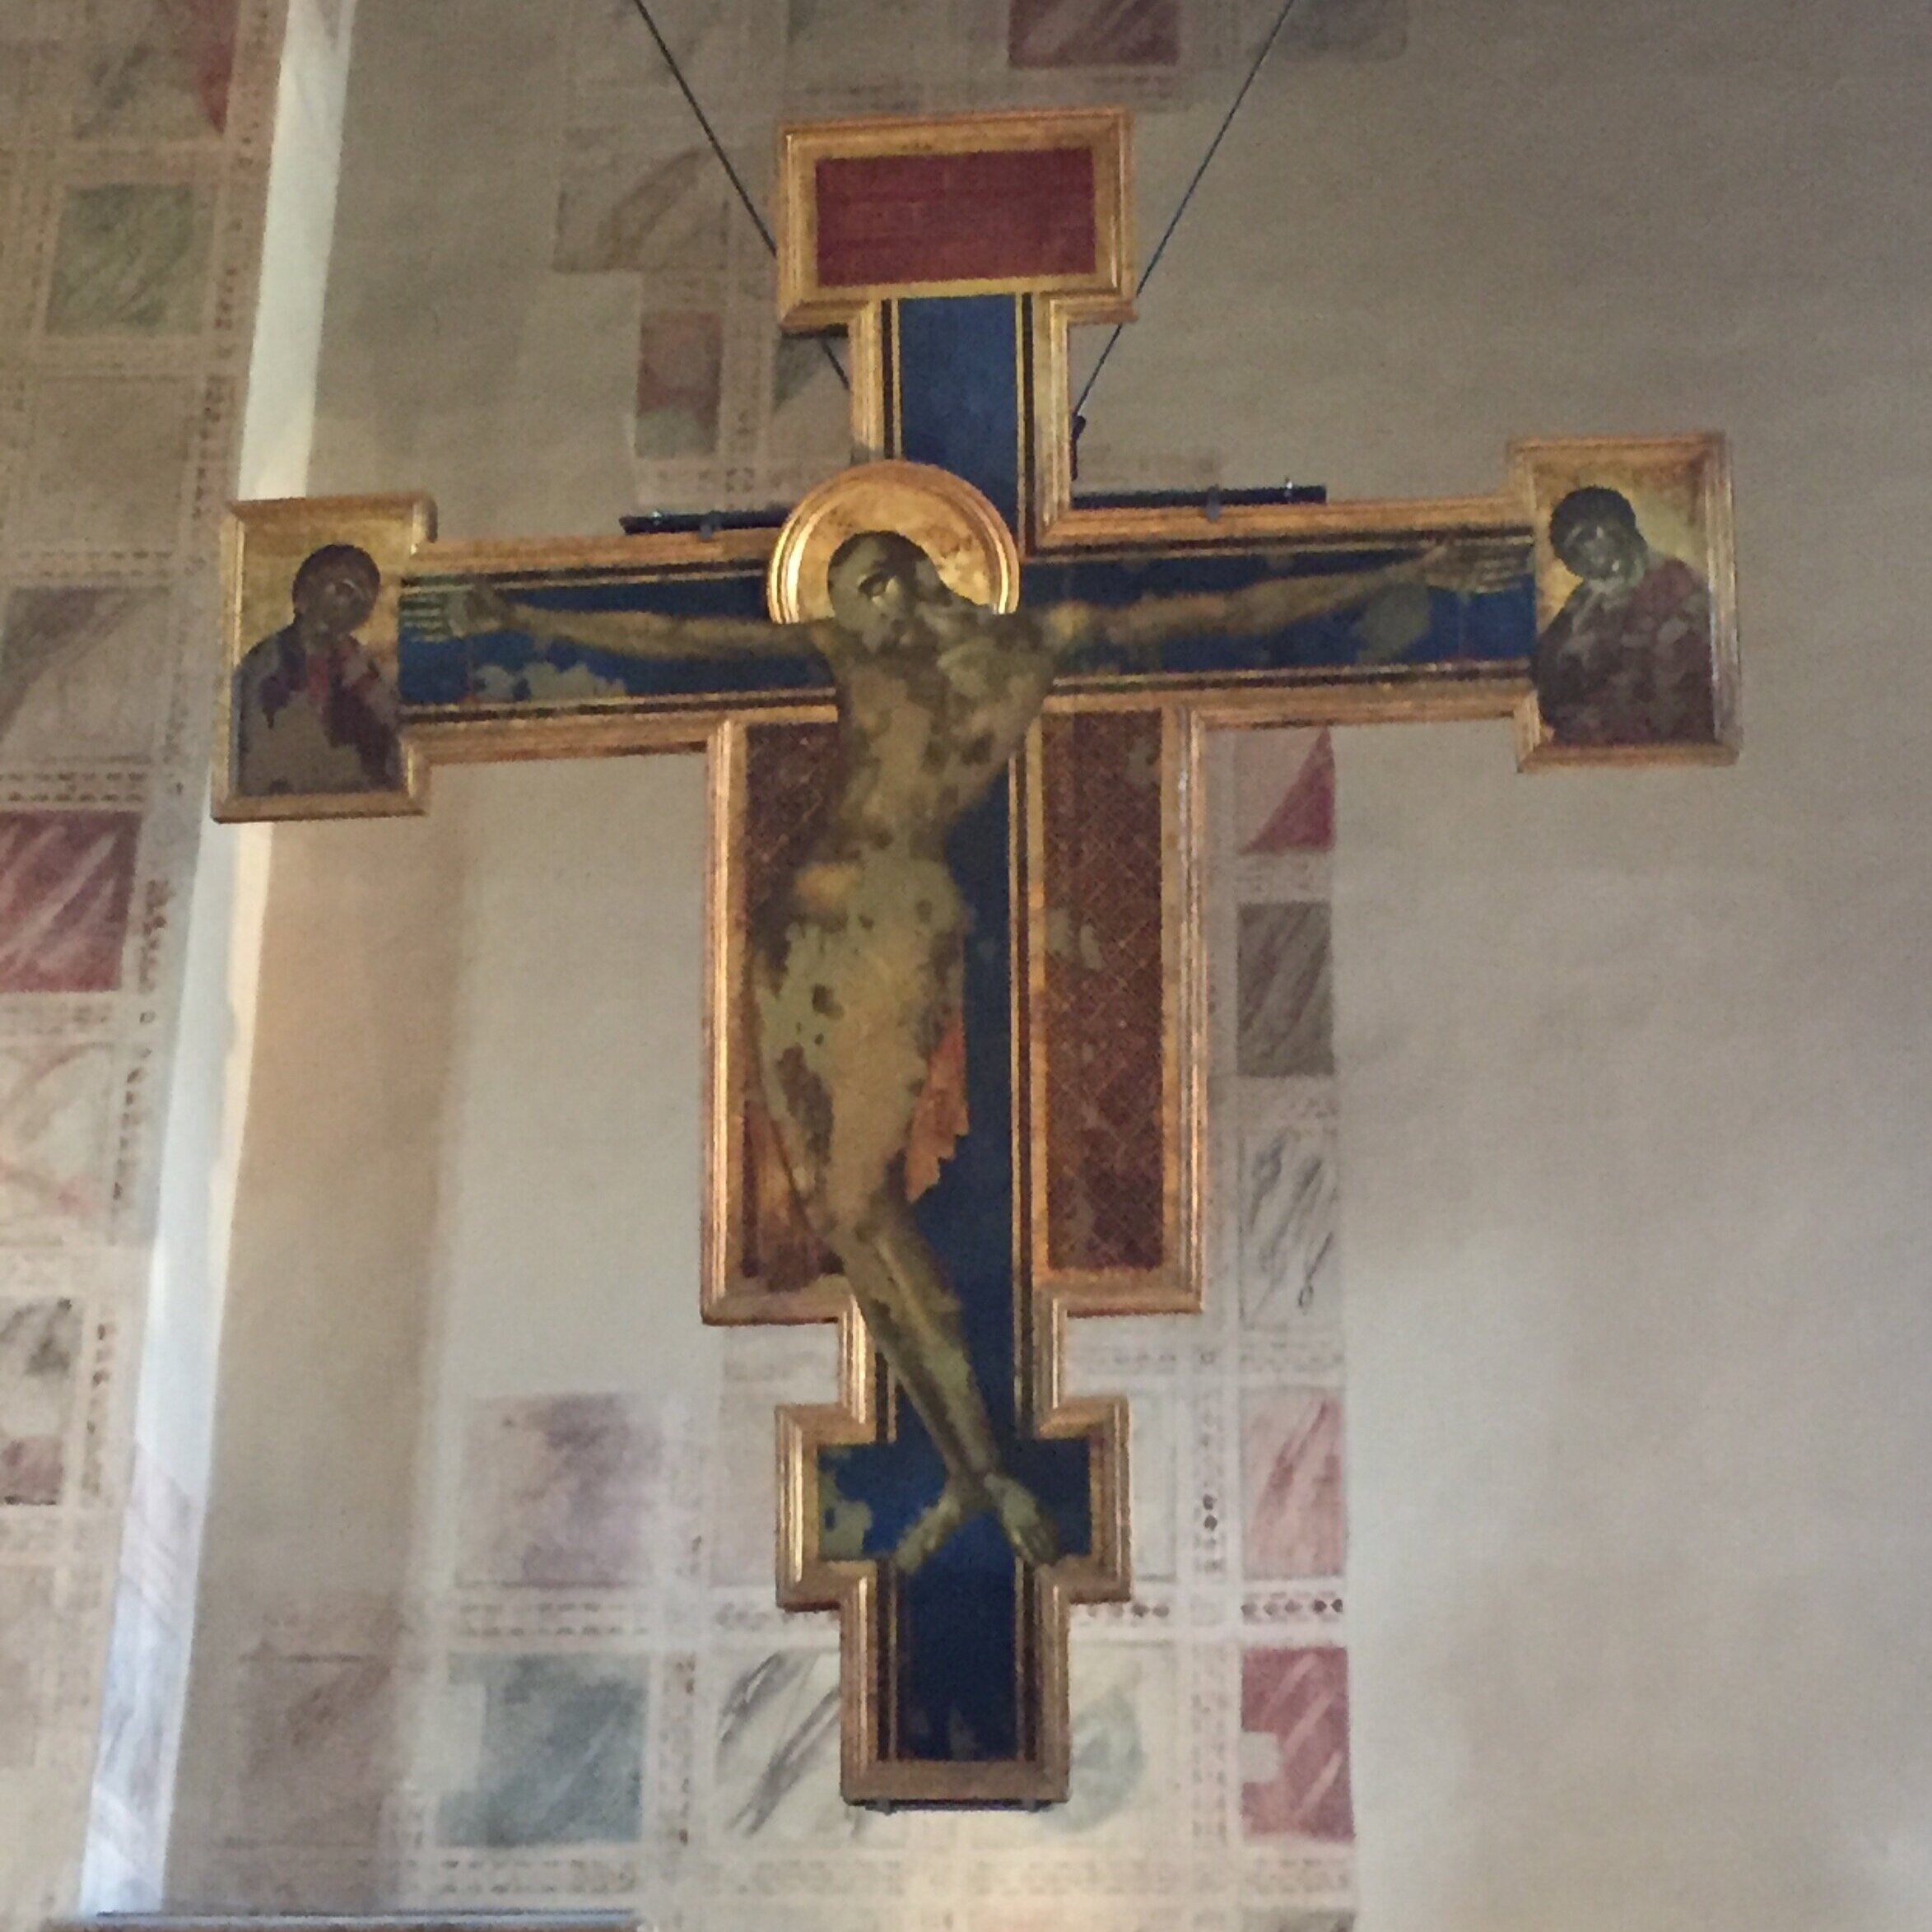 Italian Crucifix